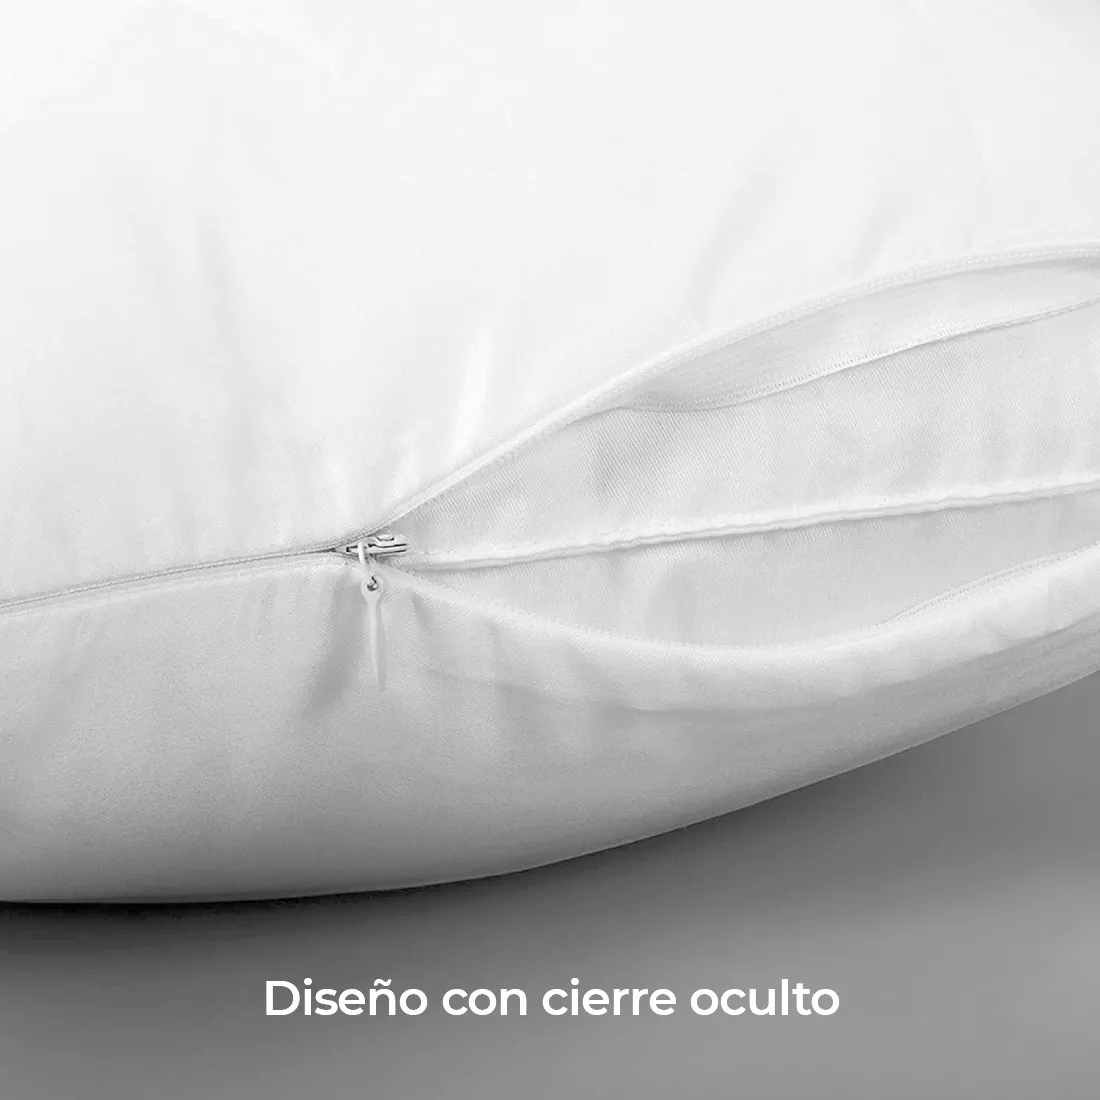 Segunda imagen para búsqueda de funda protectora para almohada impermeable